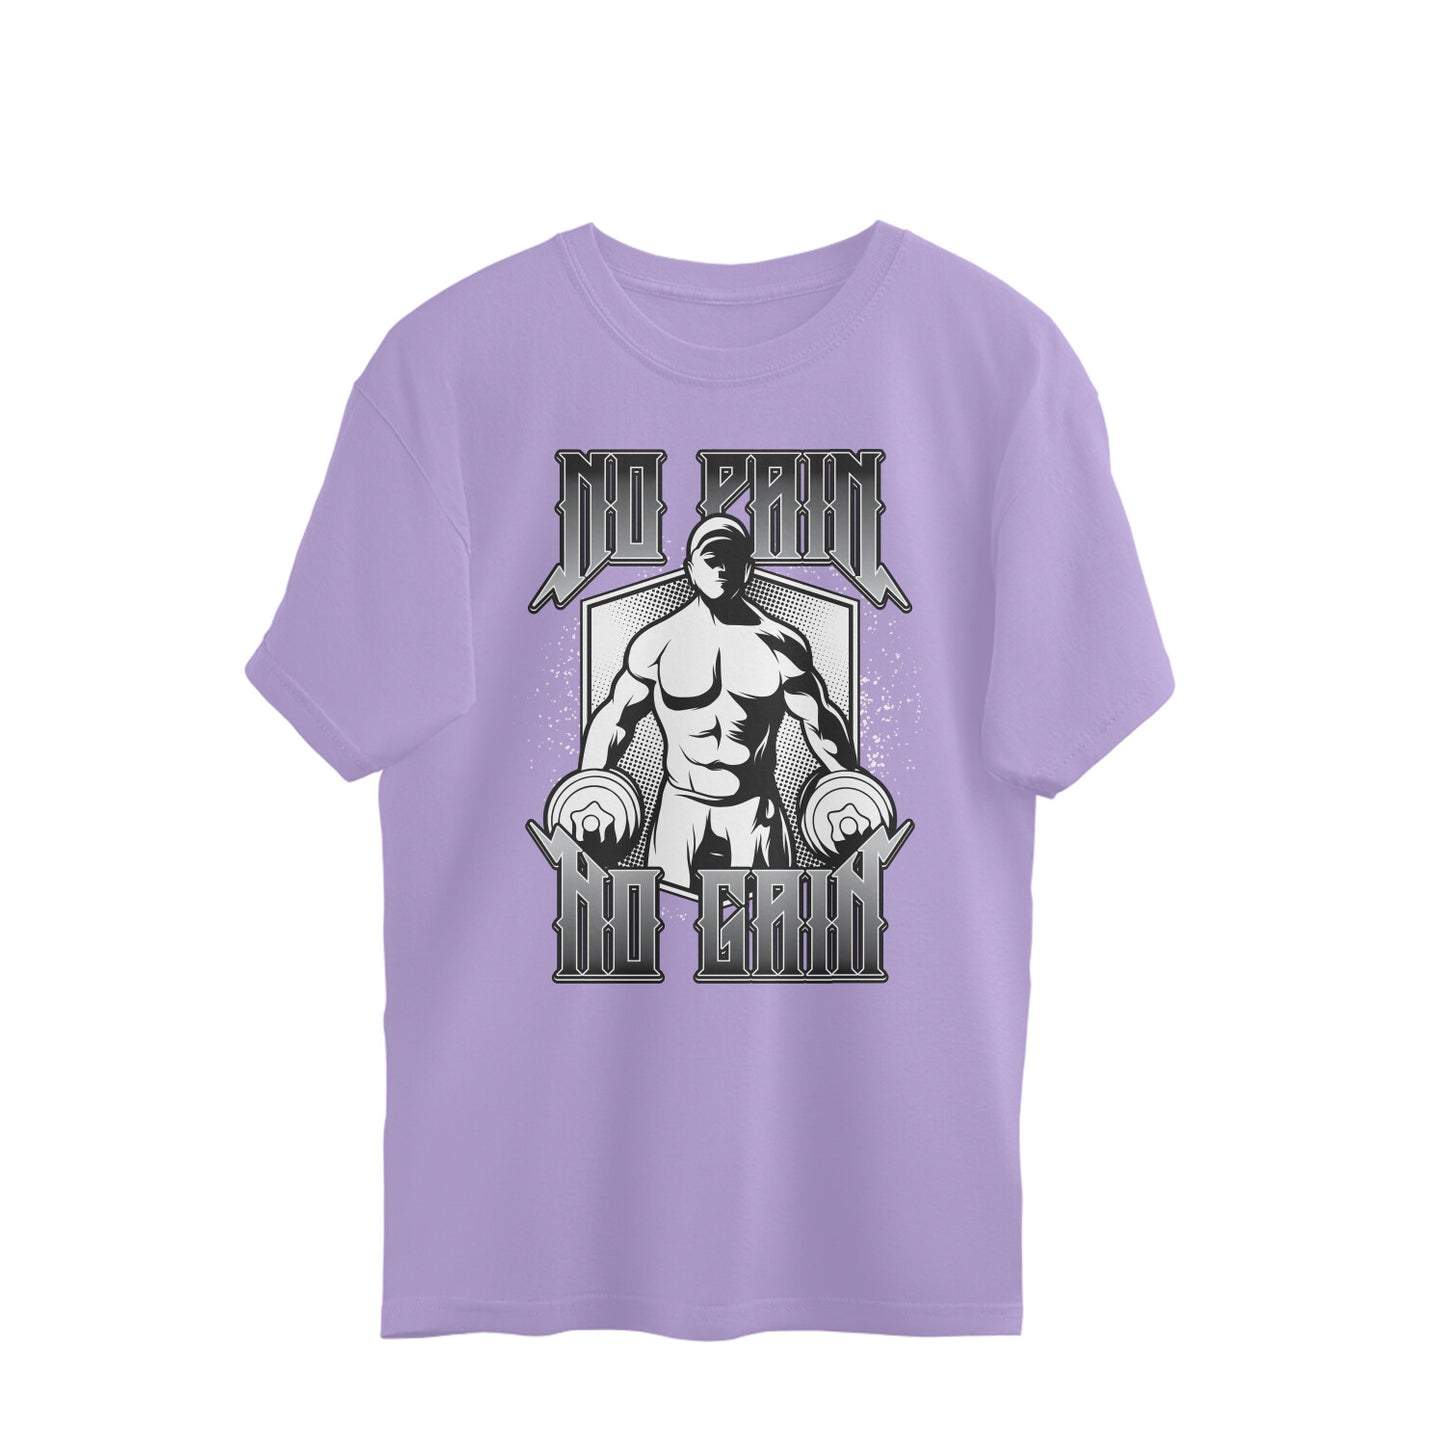 No Pain No Gain - Lift is all u need - Oversized - Motivational Gym T-Shirt